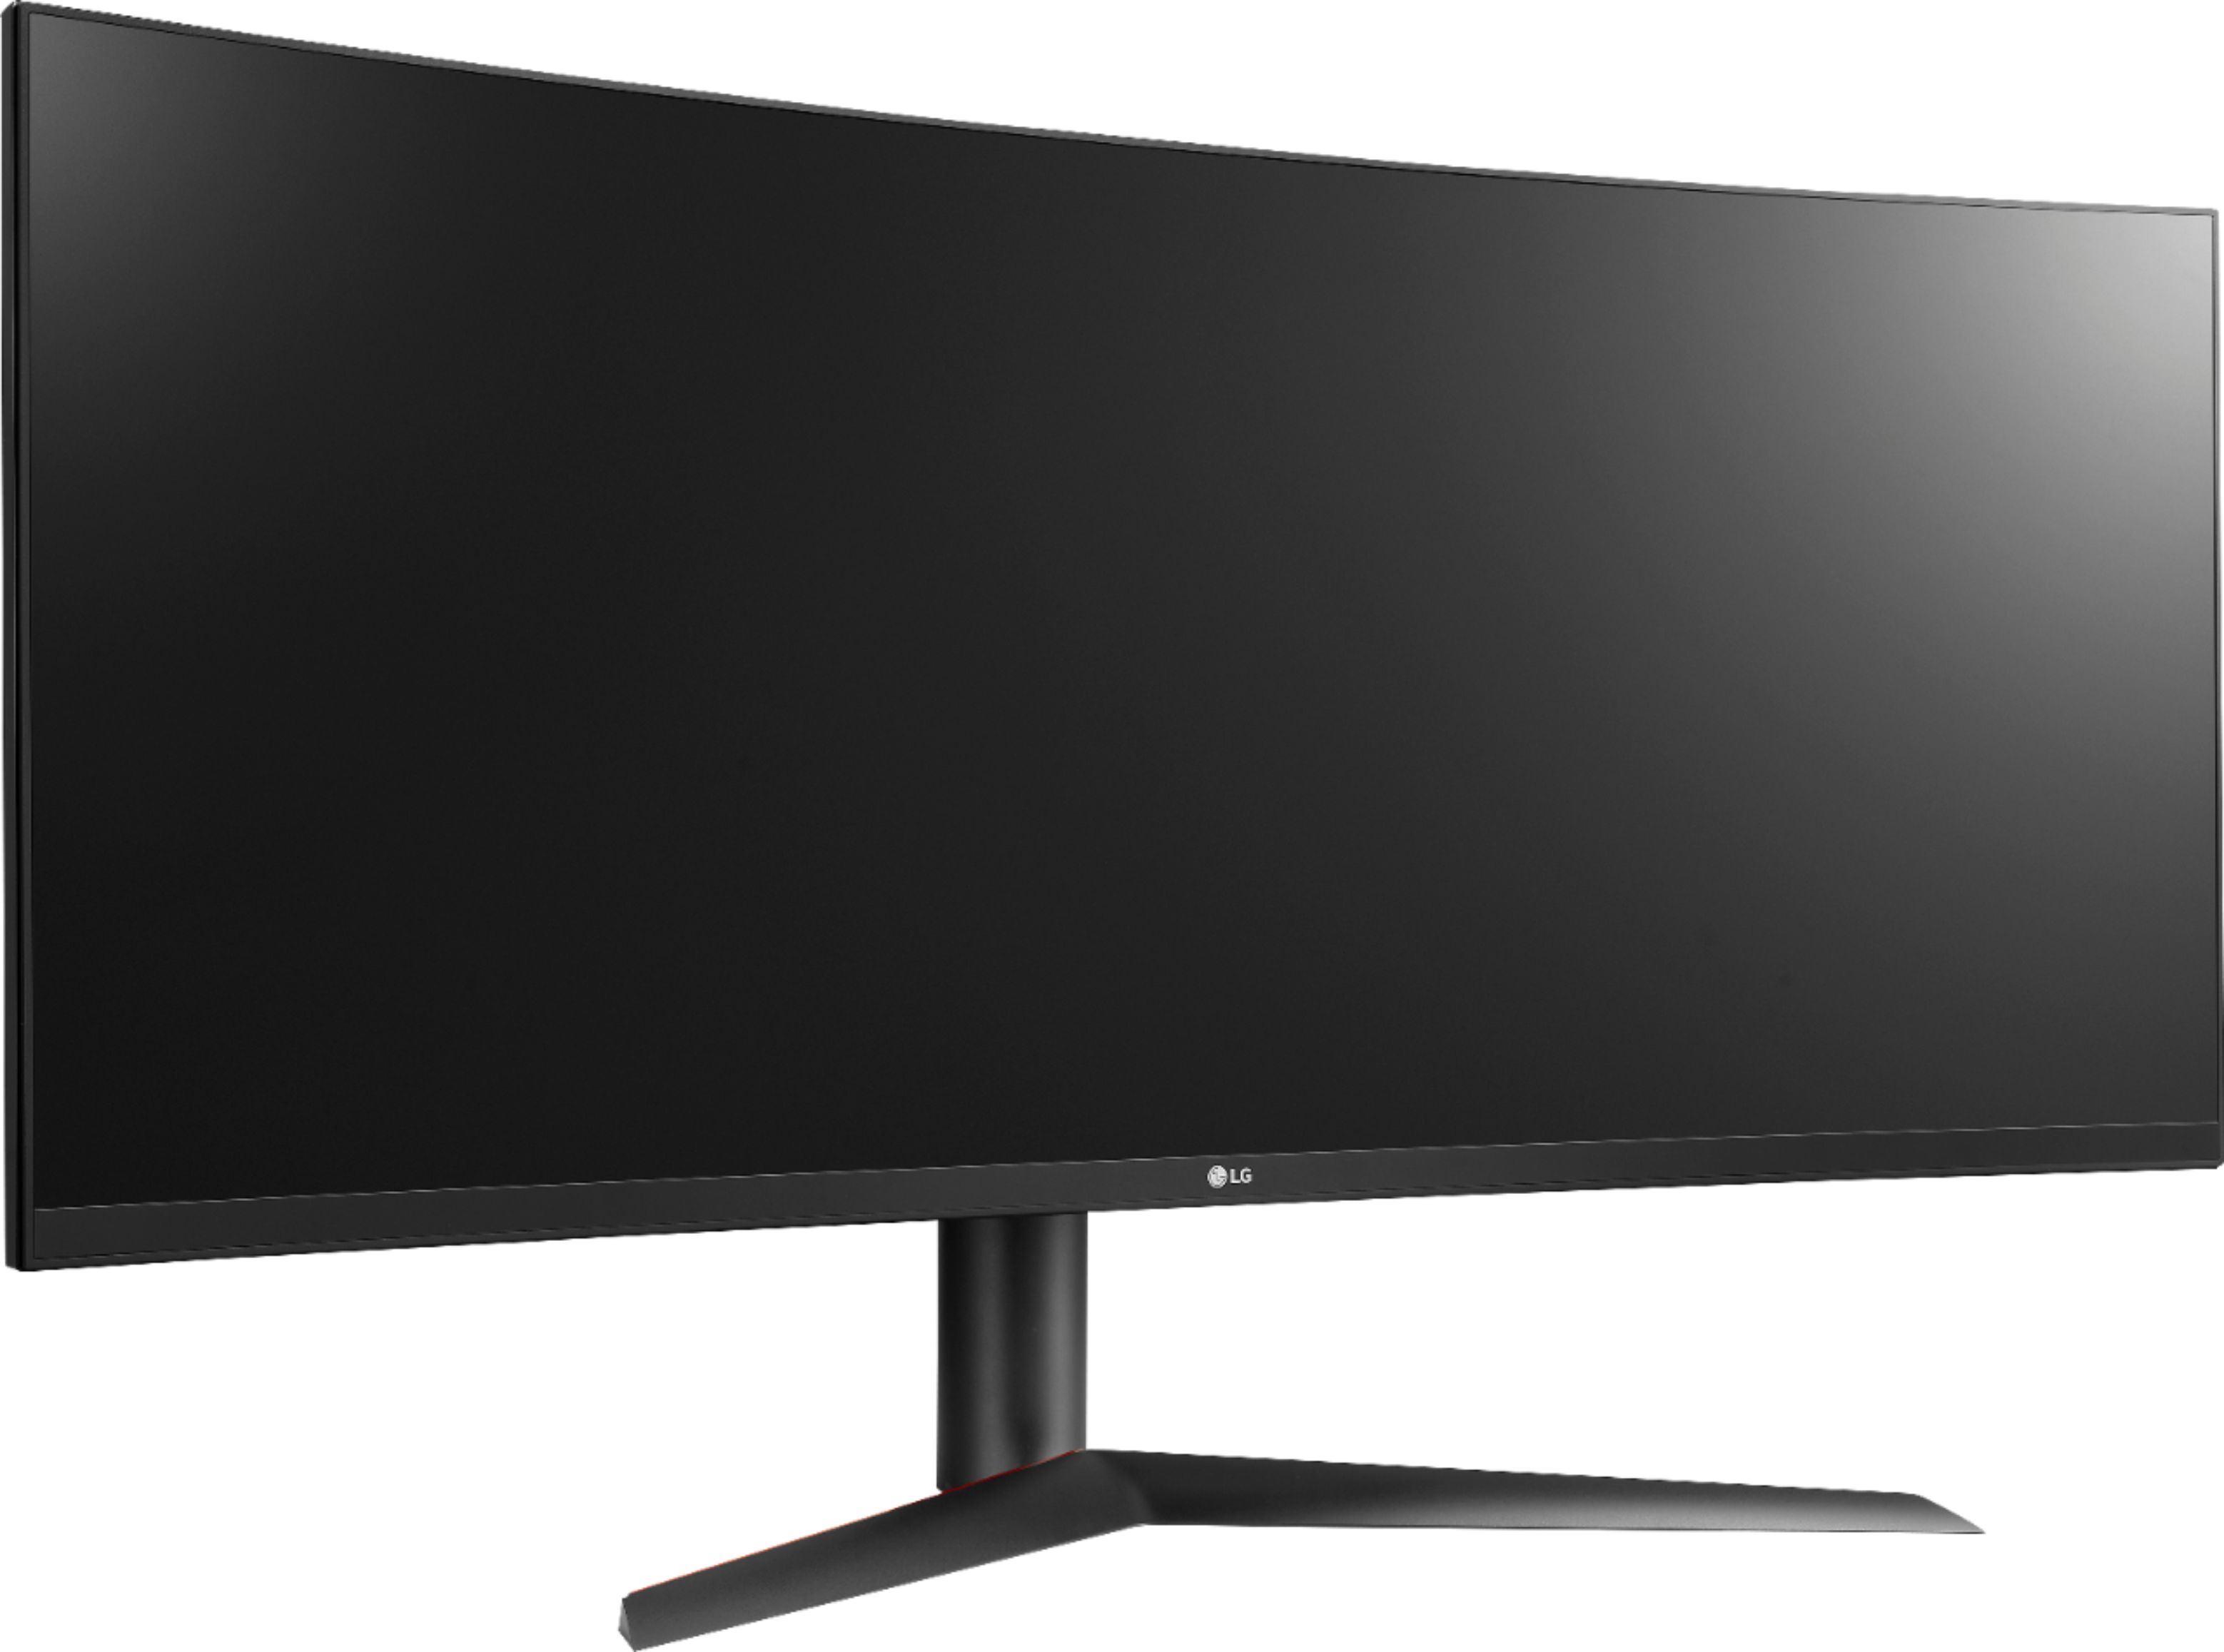 Angle View: ASUS - VG248QG 24" Widescreen LCD ELMB Sync, Adaptive-Sync snd FreeSync Compatible FHD Gaming Monitor (DisplayPort, HDMI) - Black